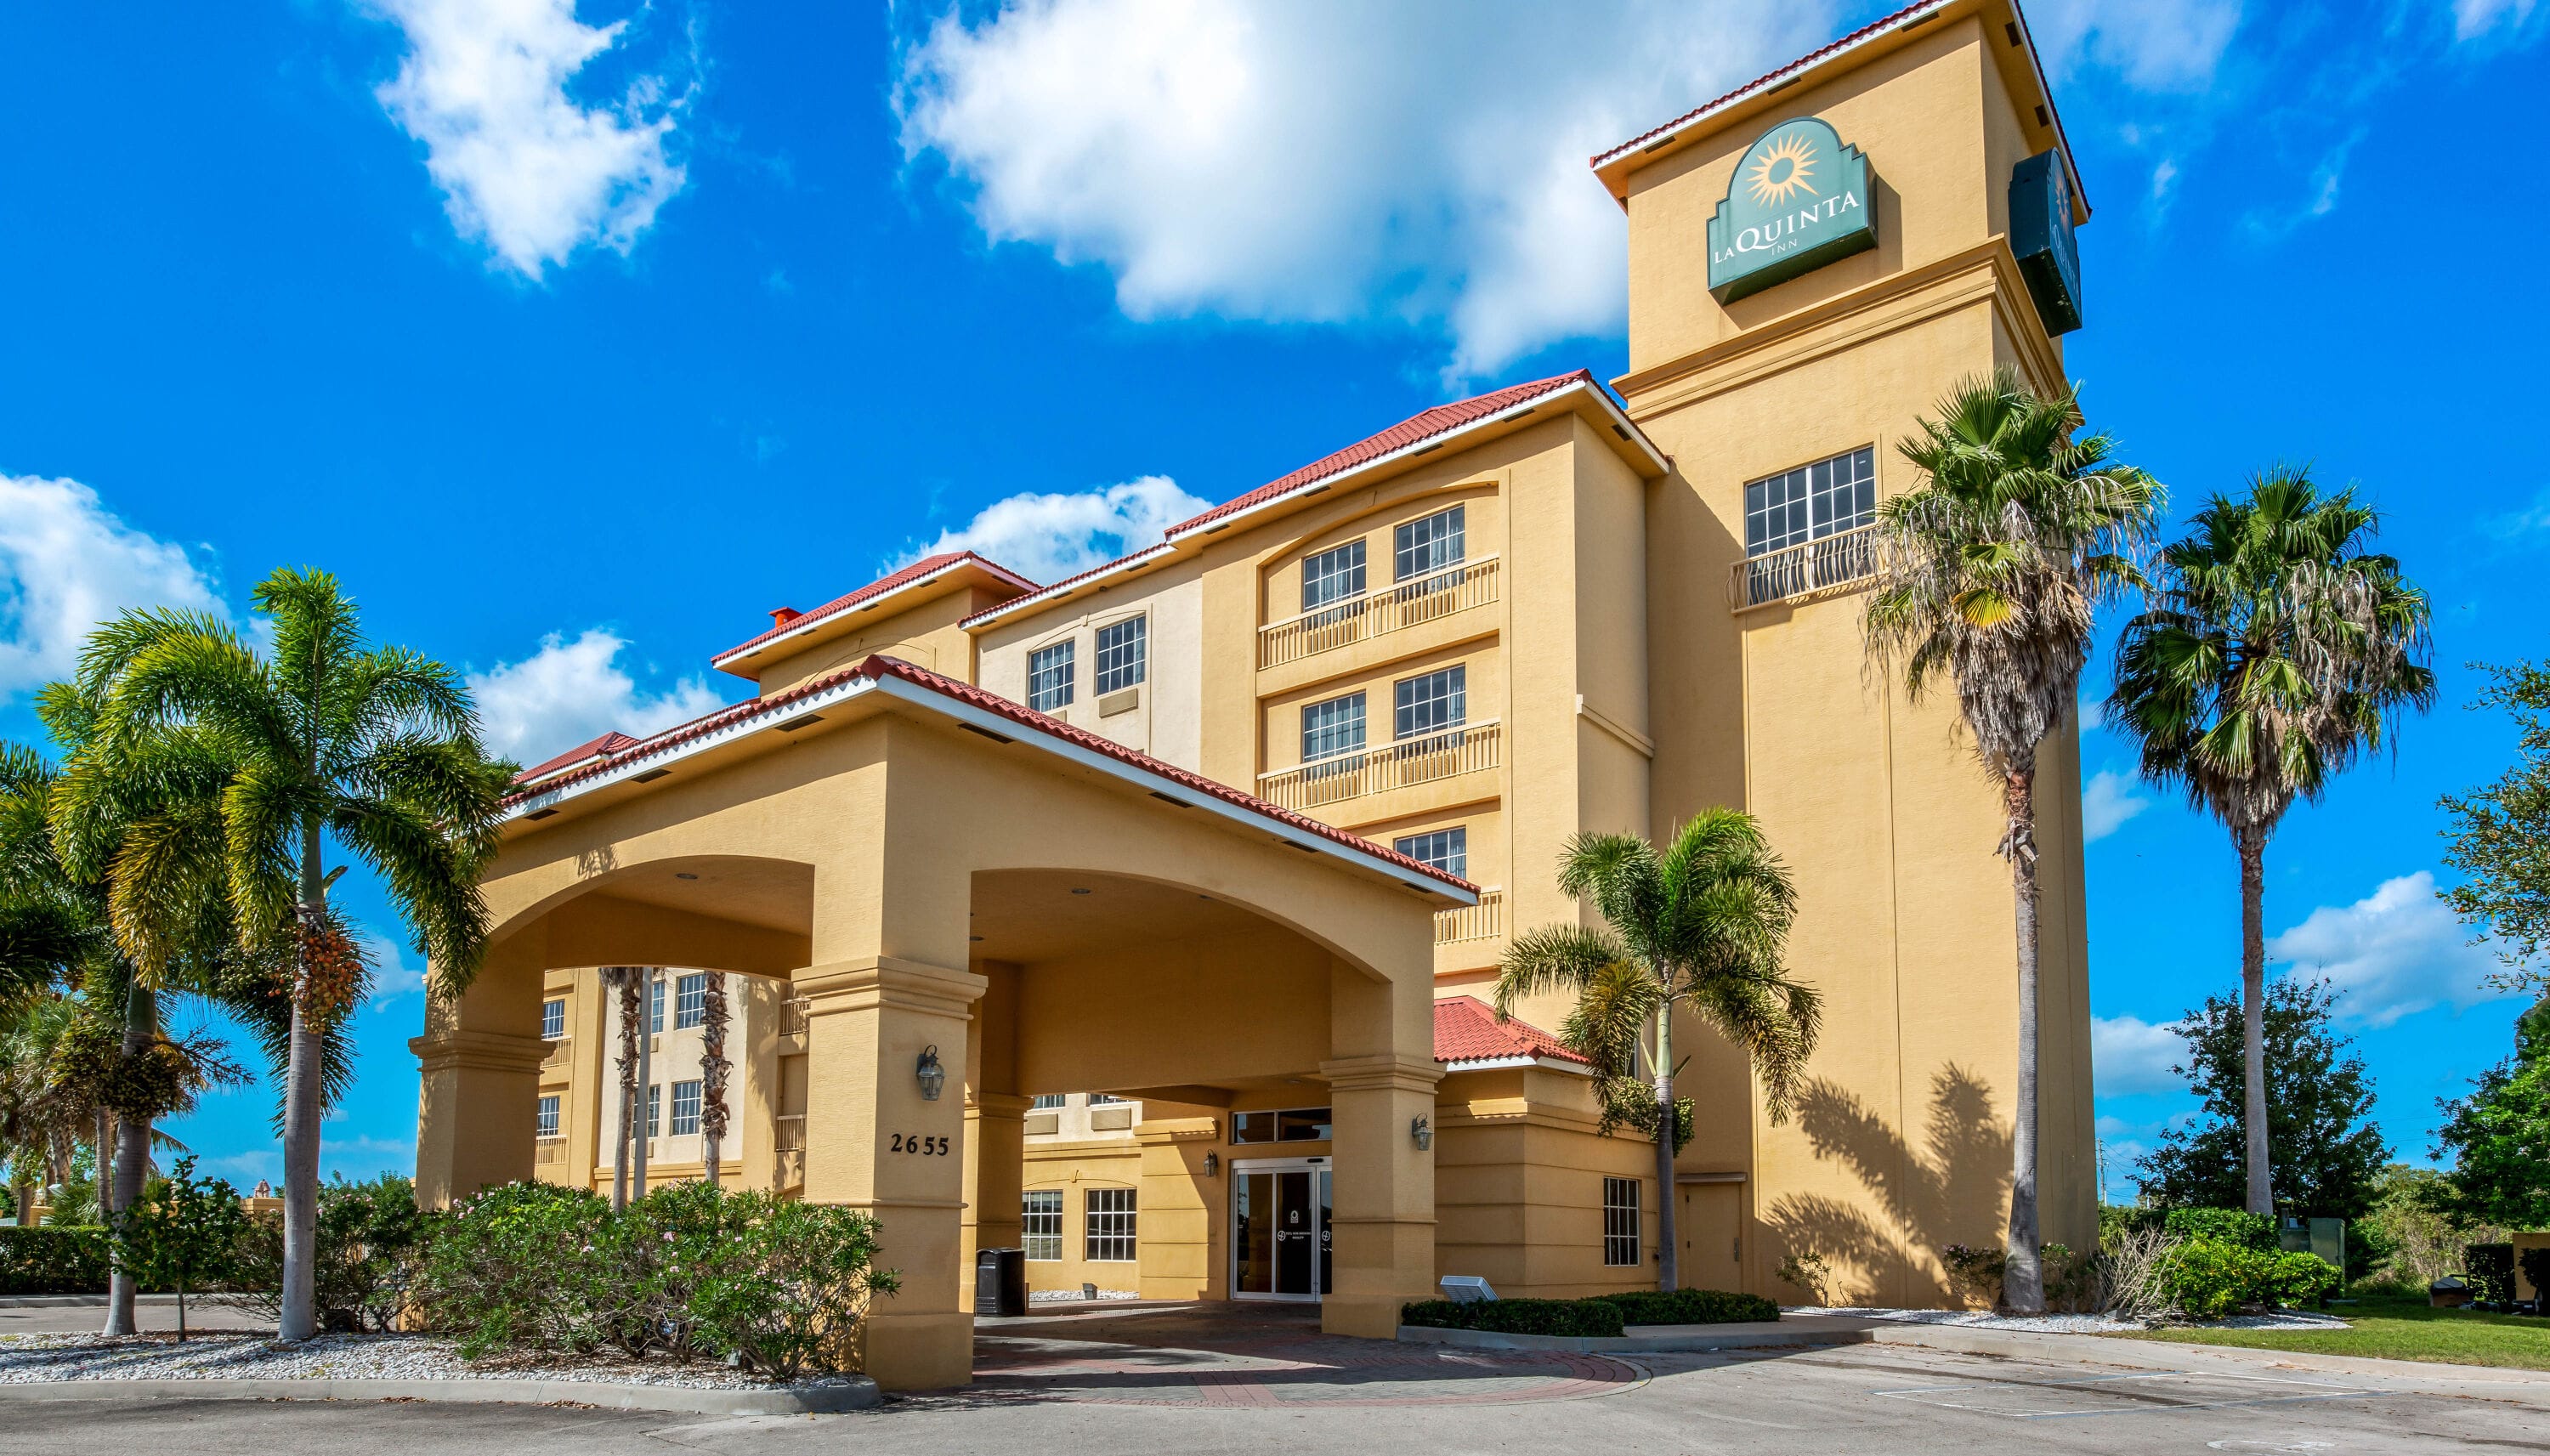 La Quinta Inn & Suites by Wyndham Ft. Pierce   Fort Pierce, FL Hotels